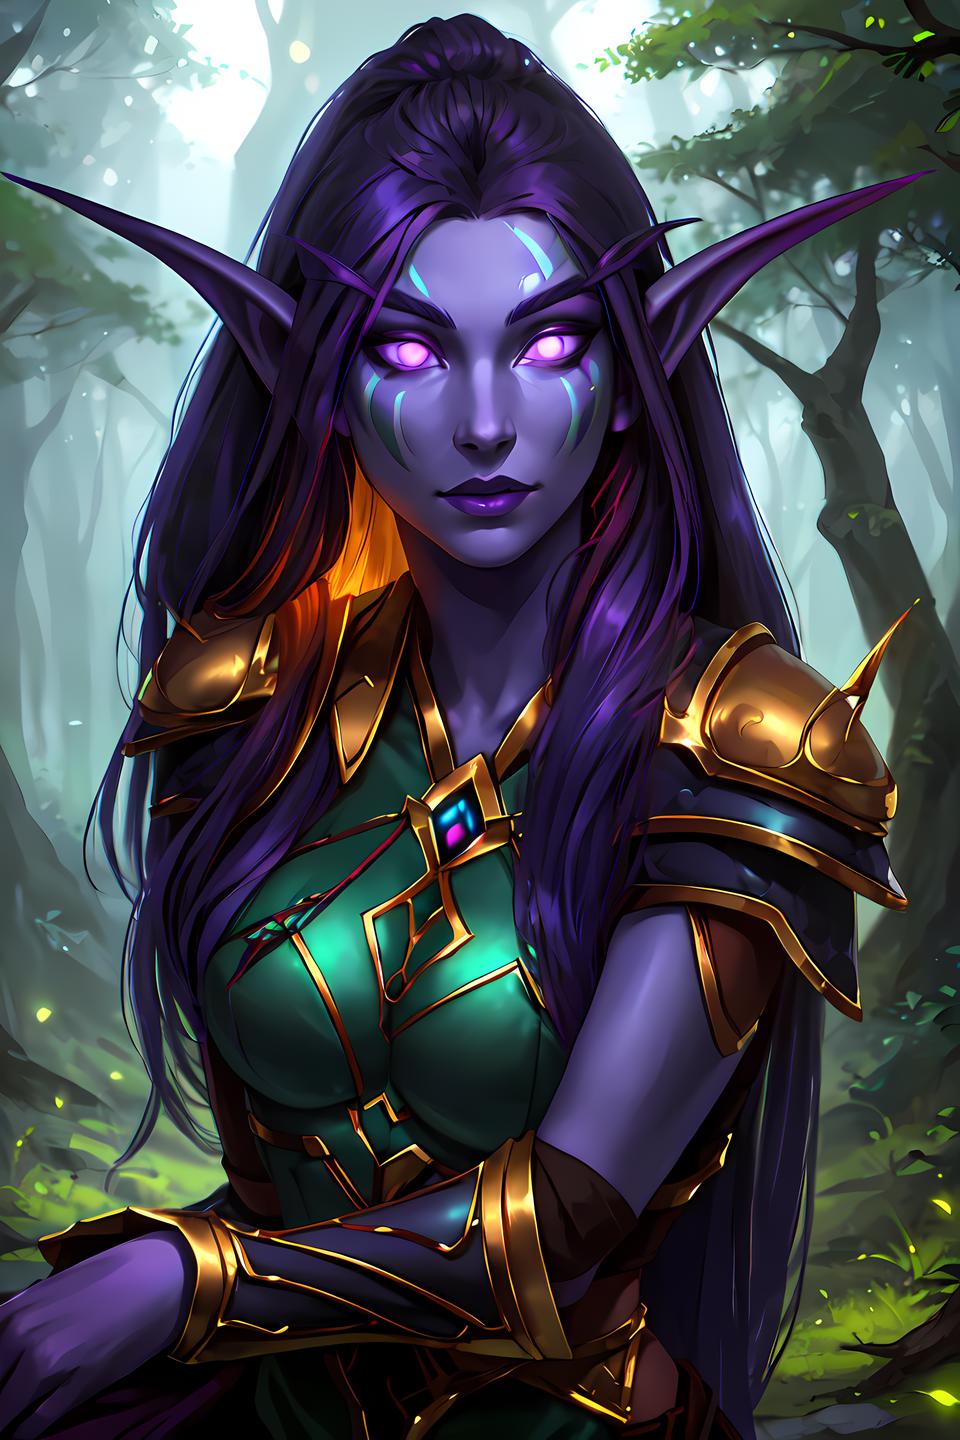 SXZ Night Elves [ Warcraft ] image by Drankore